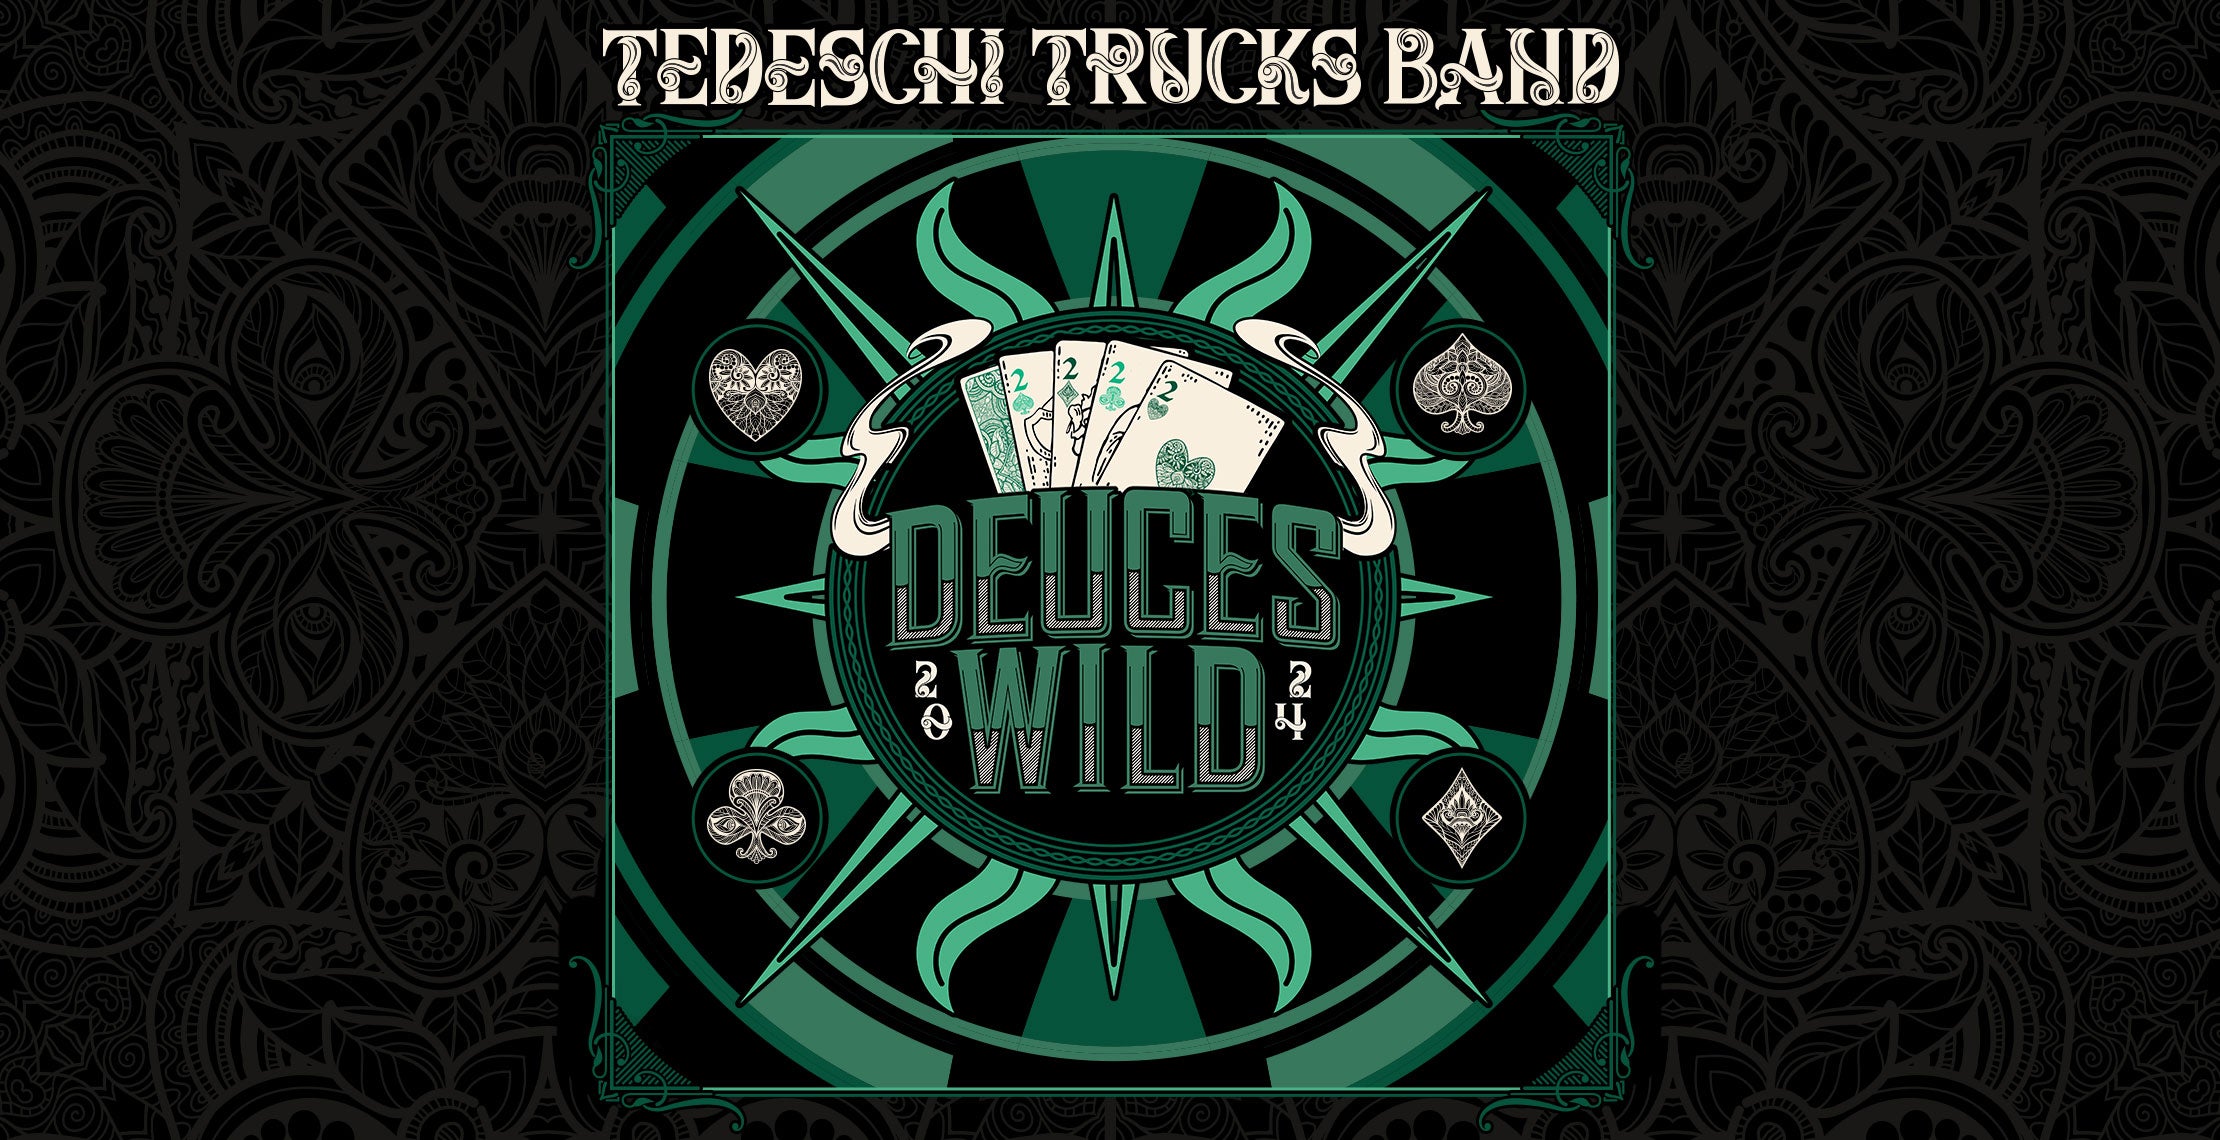 Tedeschi Trucks Band - Deuces Wild